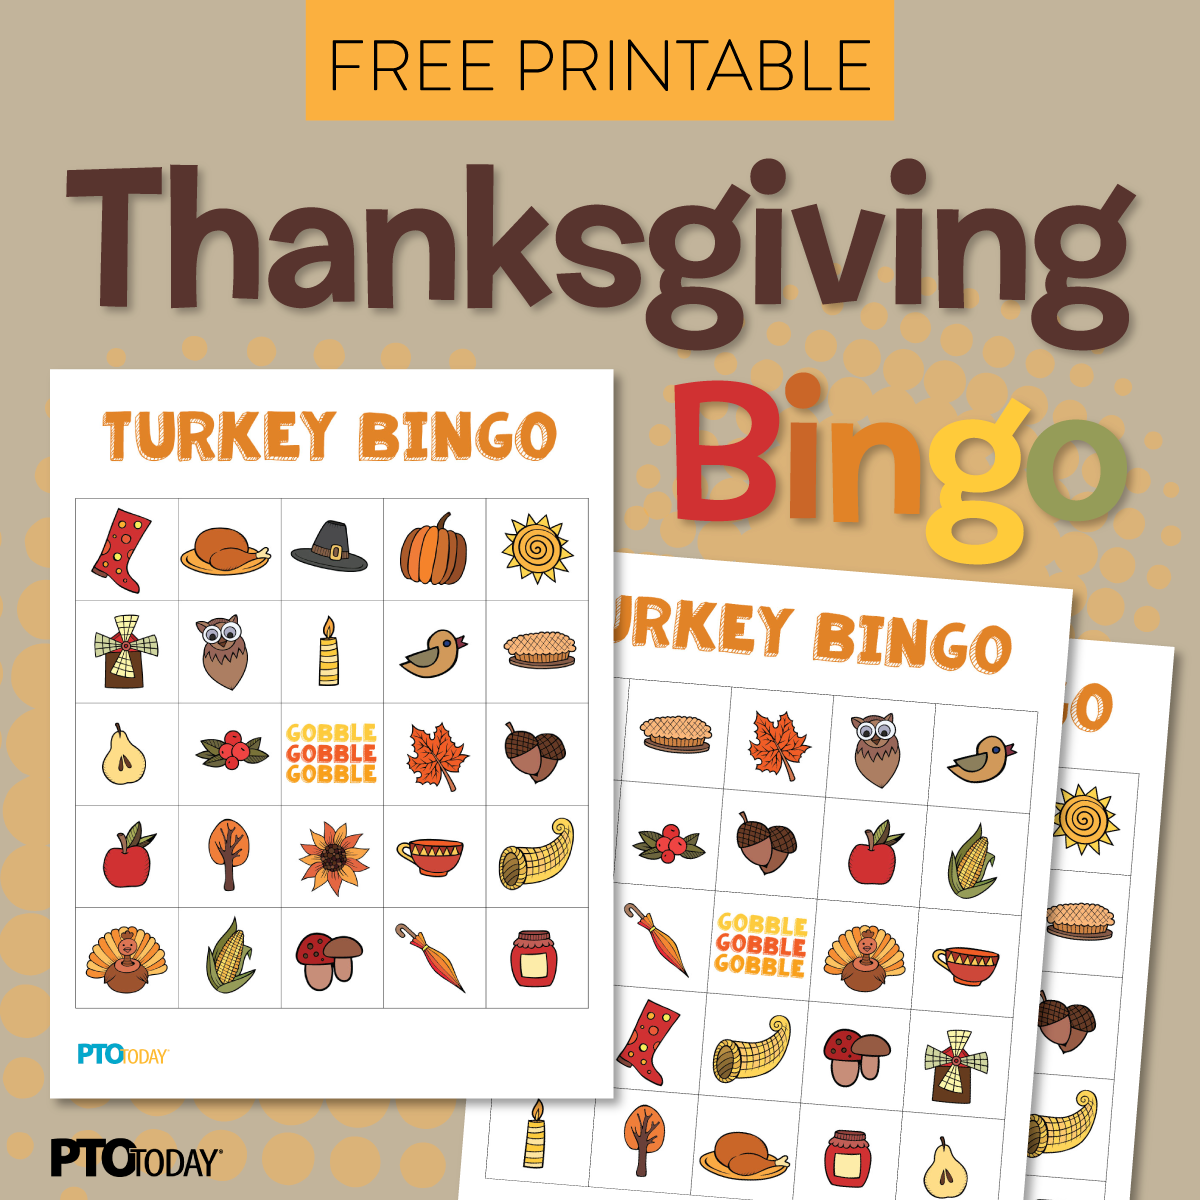 Thanksgiving-theme bingo cards